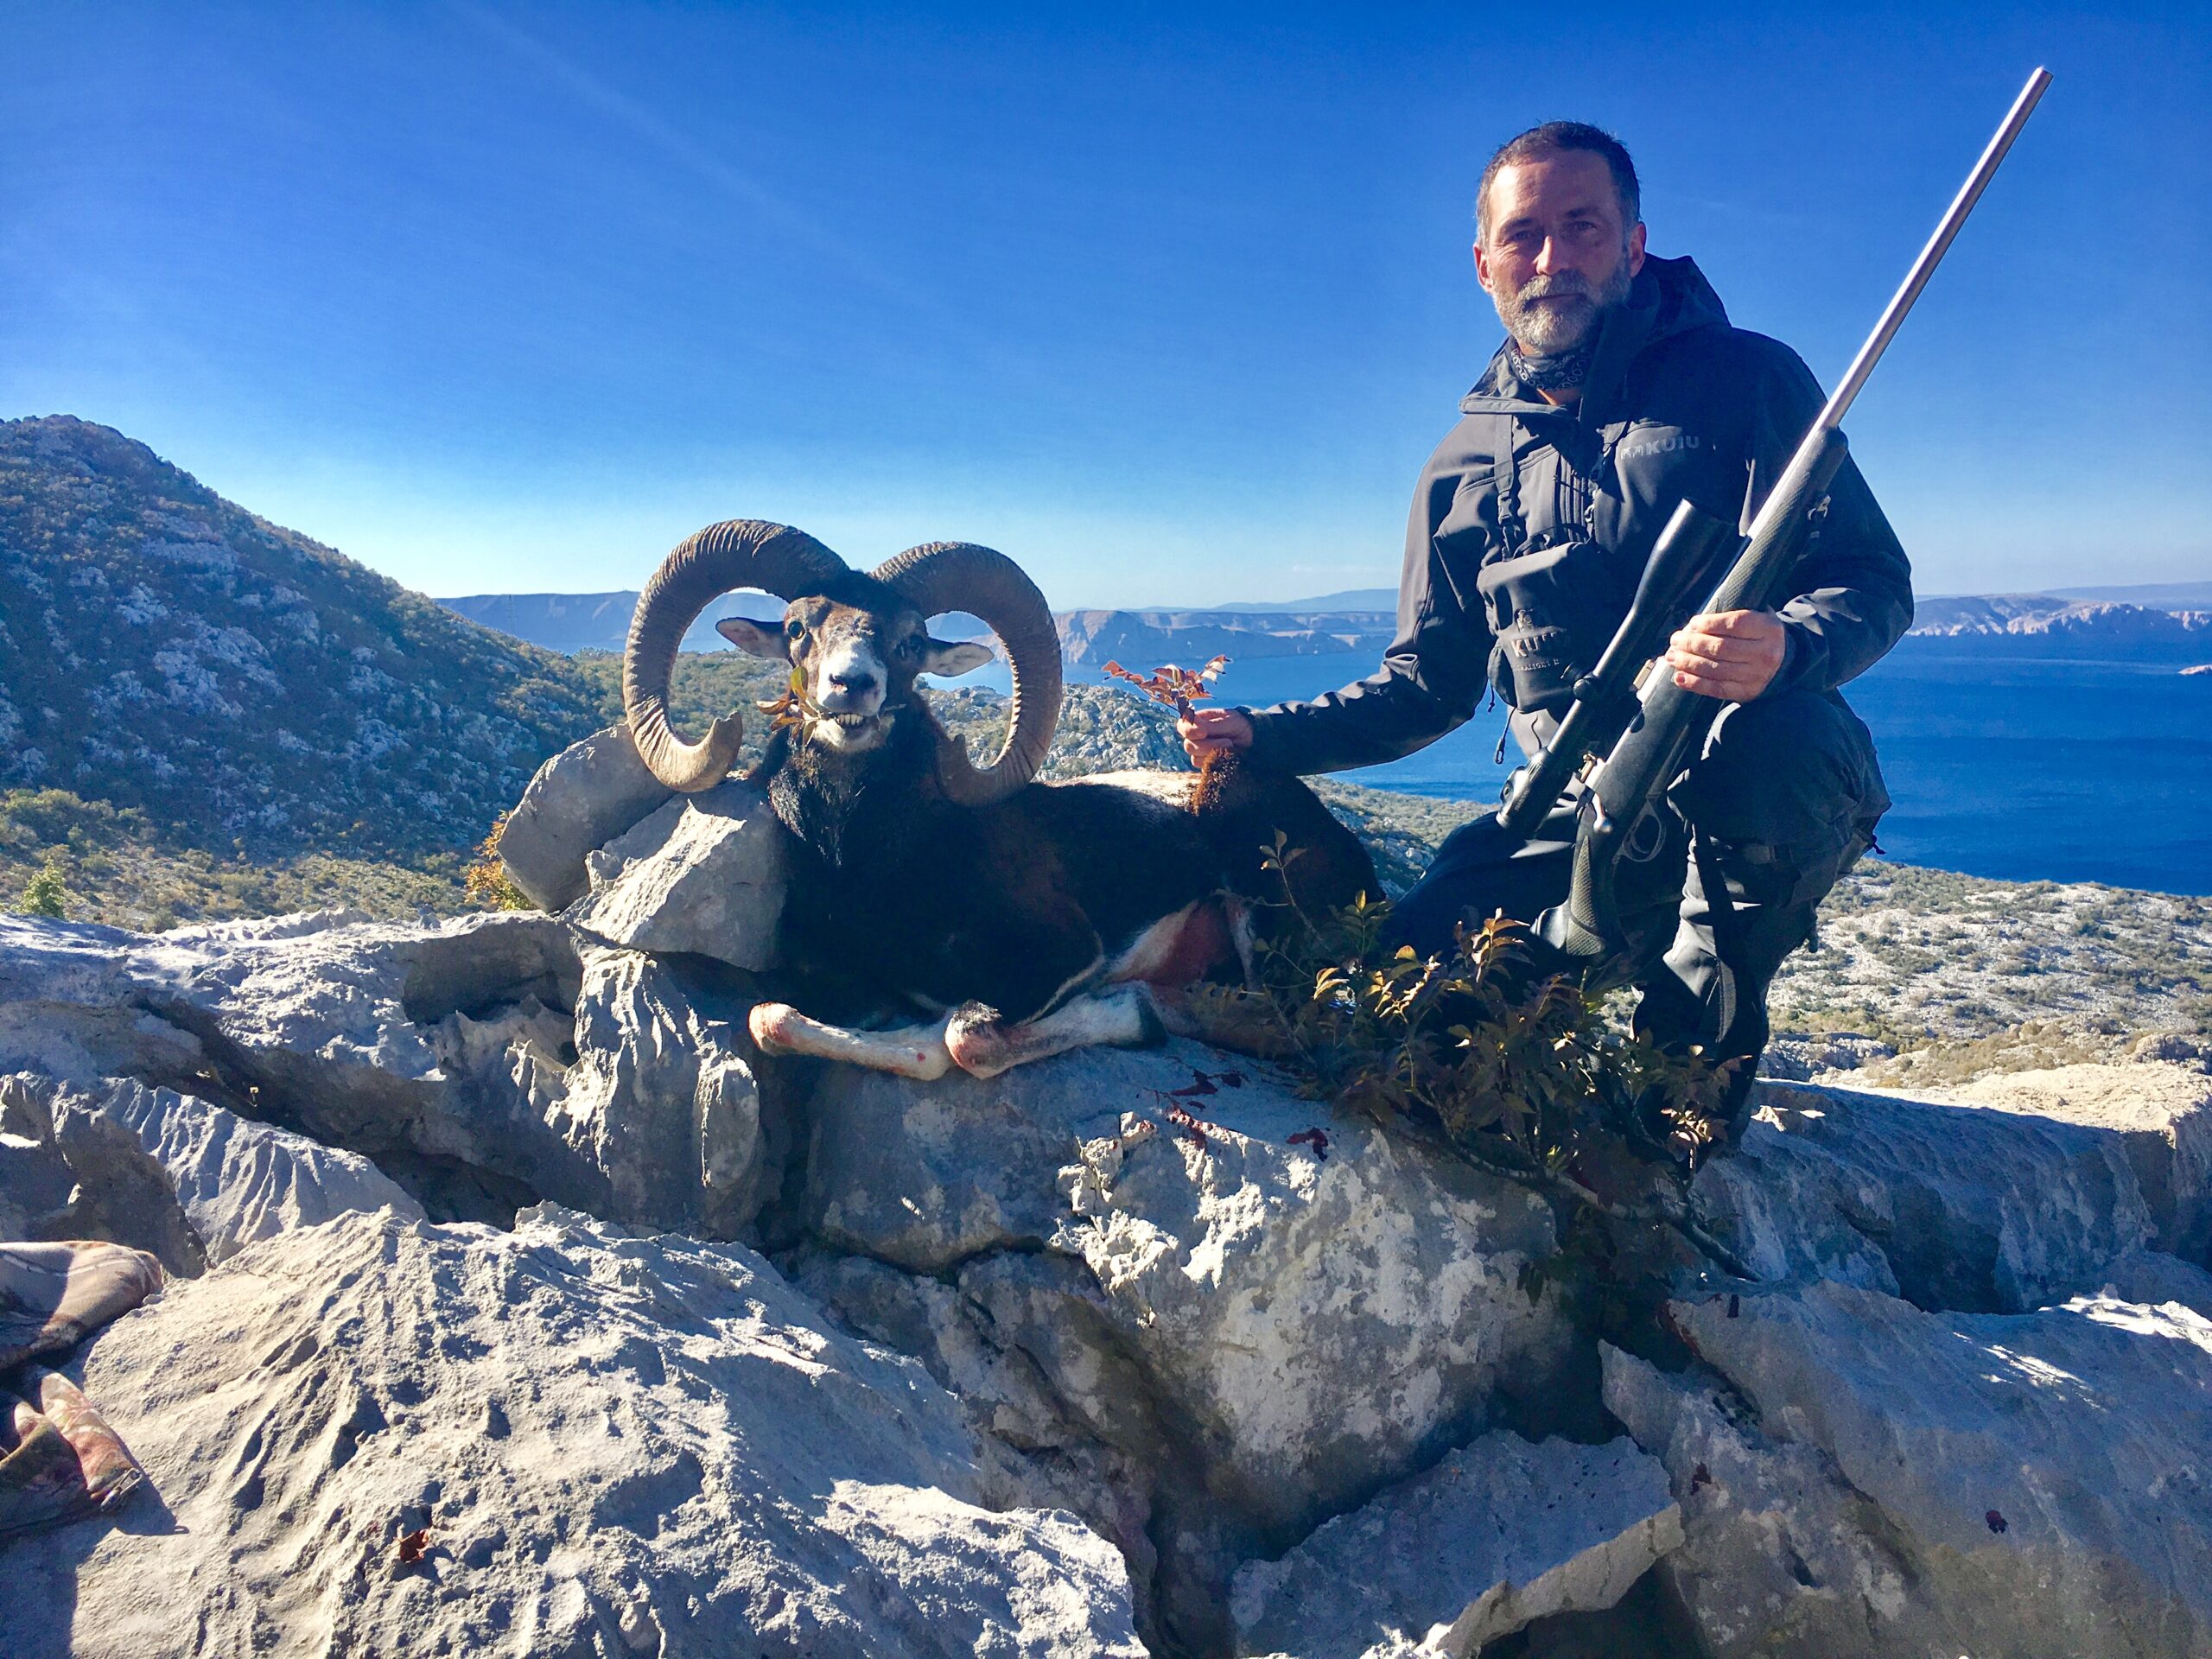 Jason Kinyon had an outstanding Croatia mouflon sheep hunt with our outfitter.